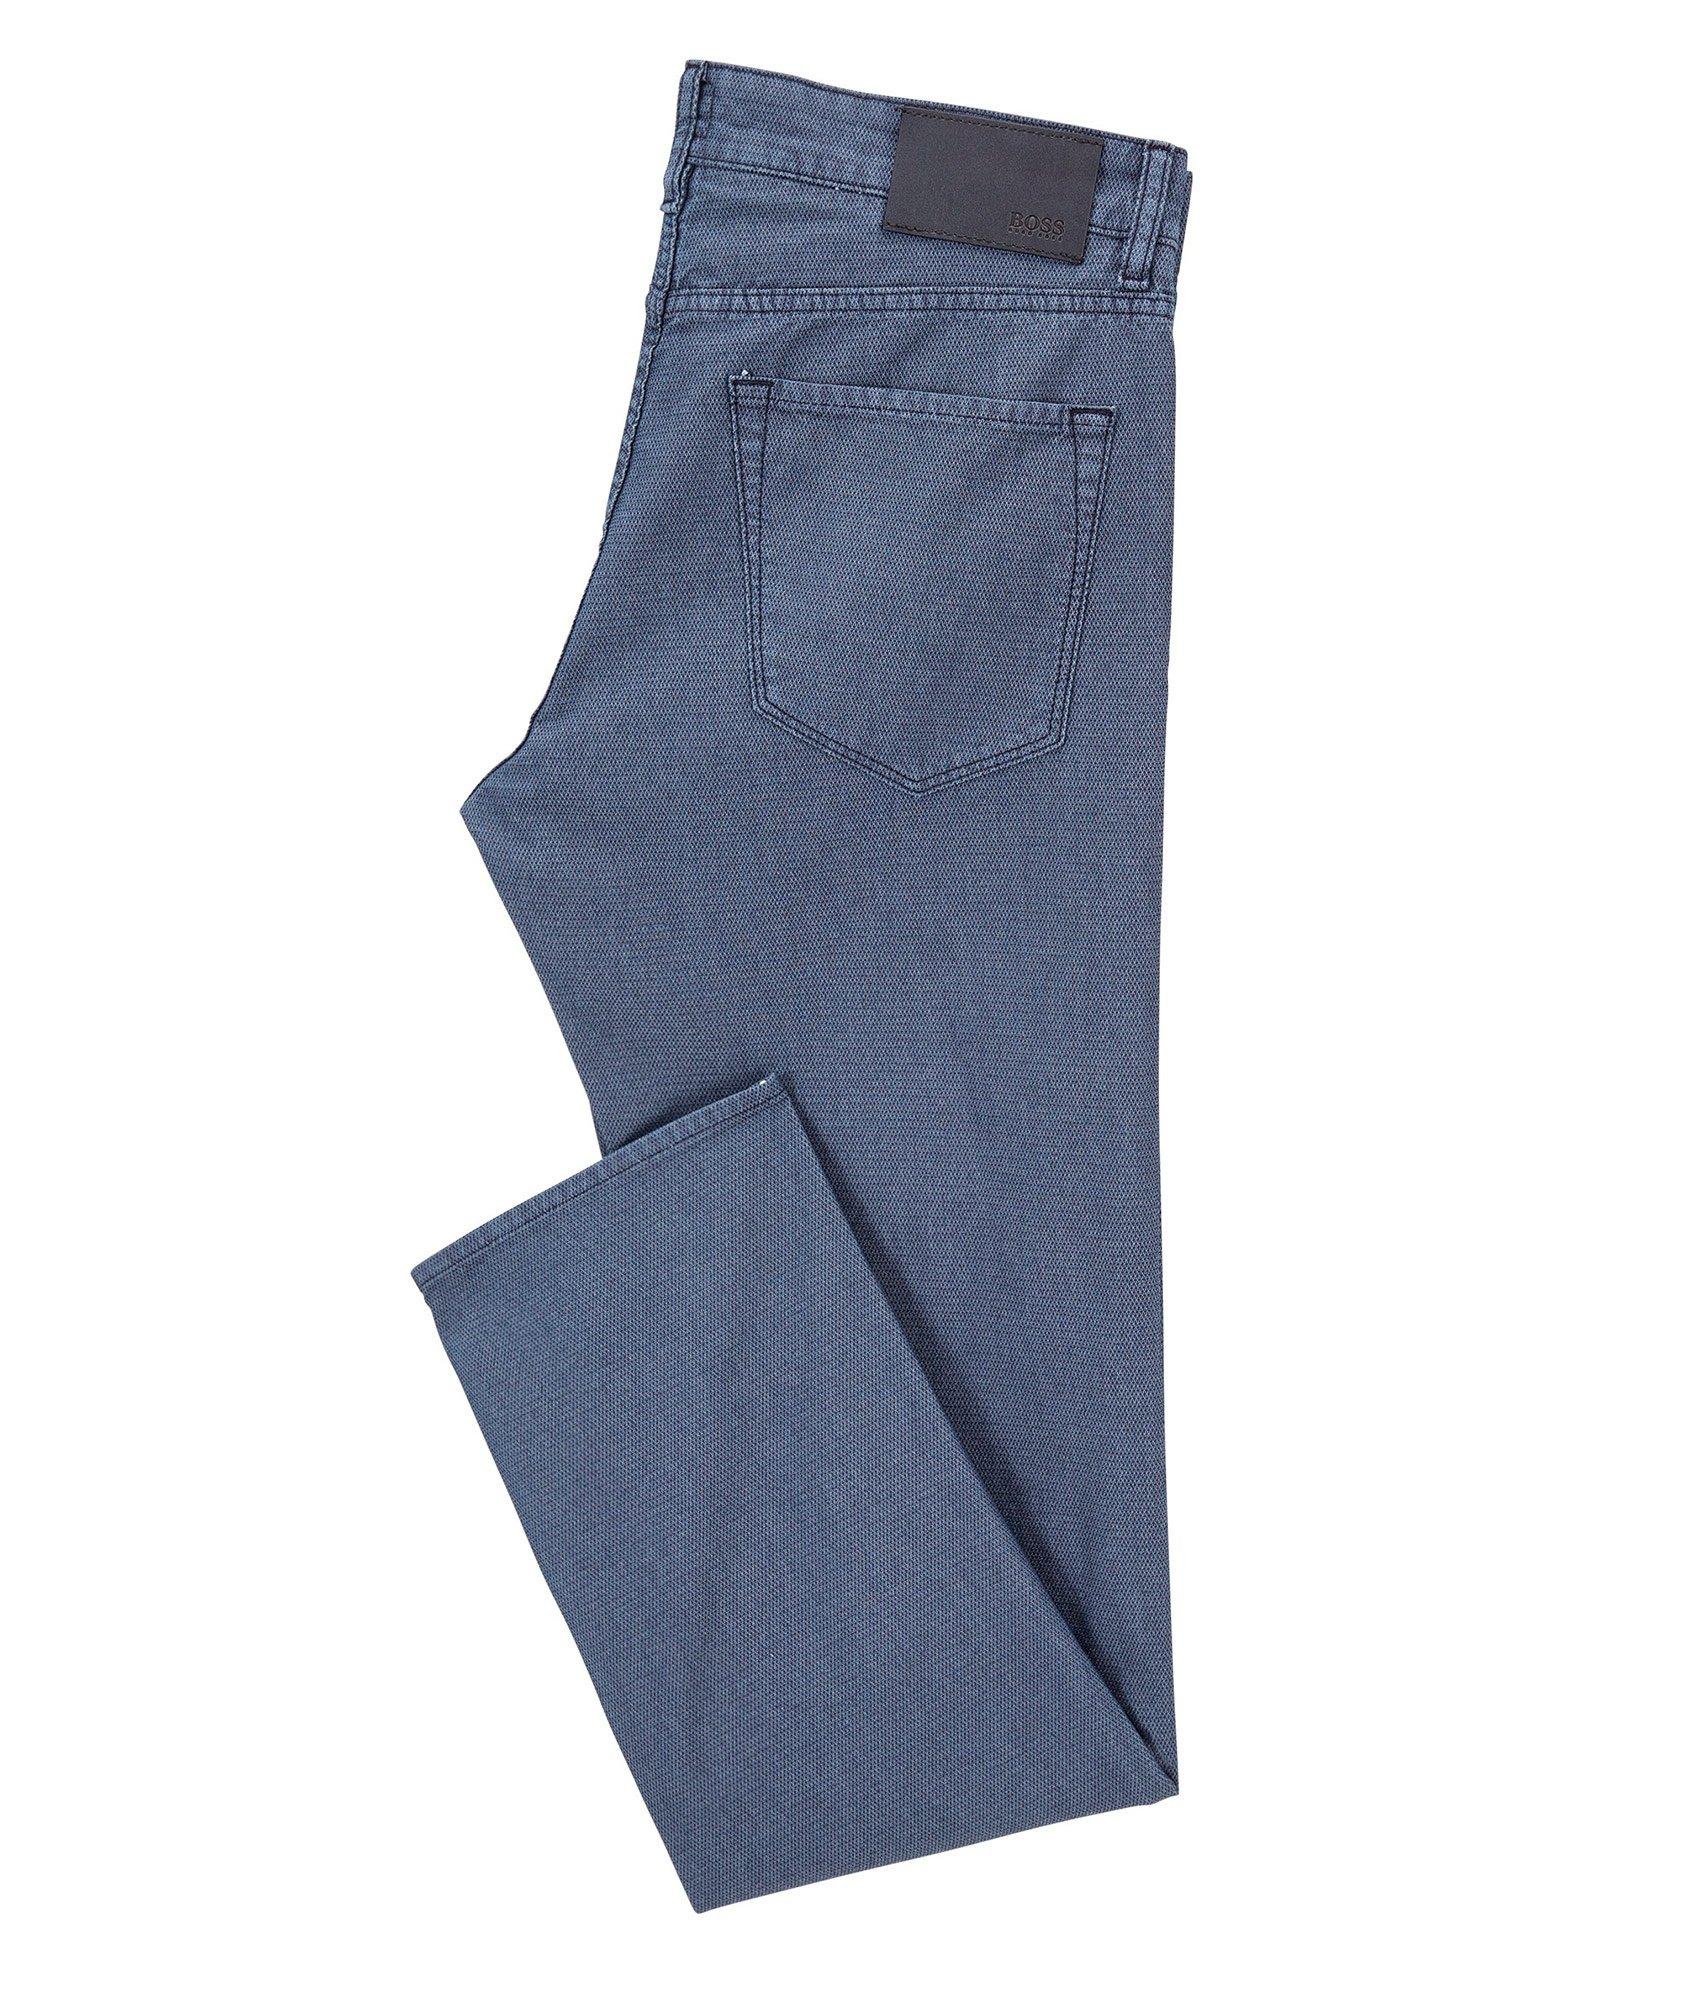 Maine Slim Fit Jeans image 0